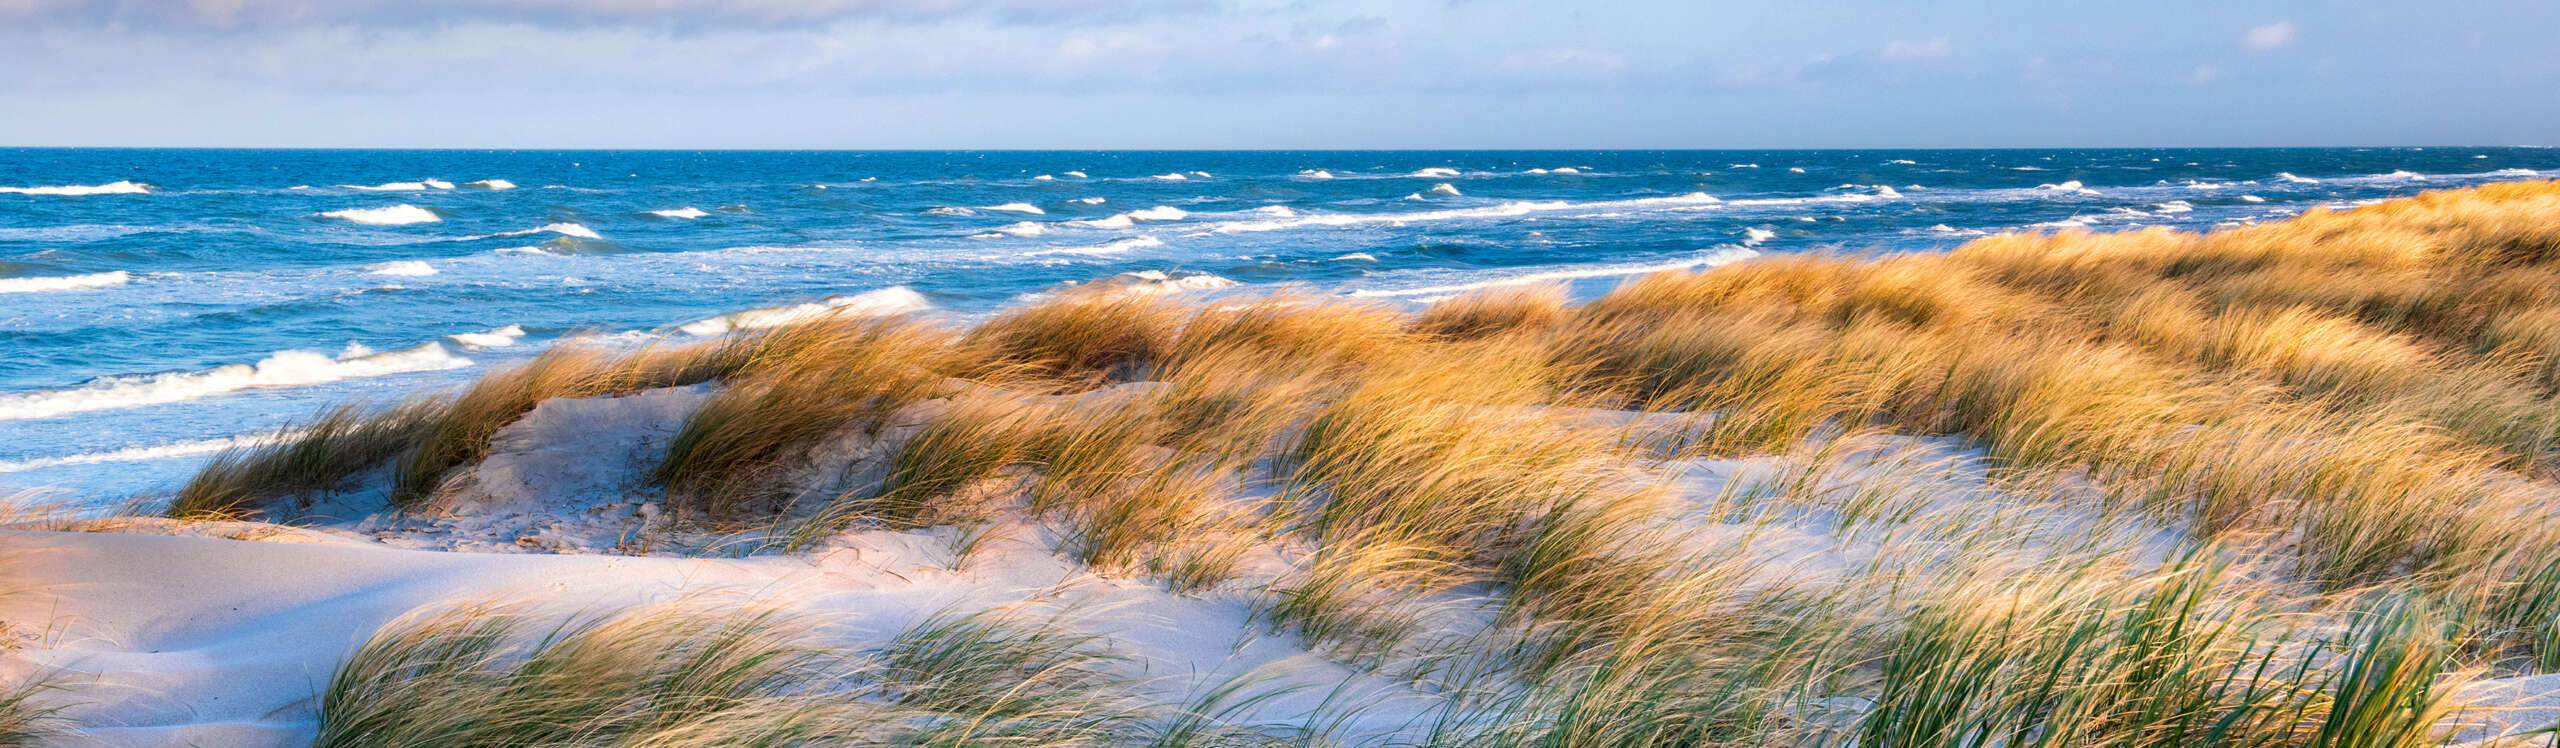 Stormy Baltic Sea, Beach with Coastal Dunes, Darss Peninsula, Germany